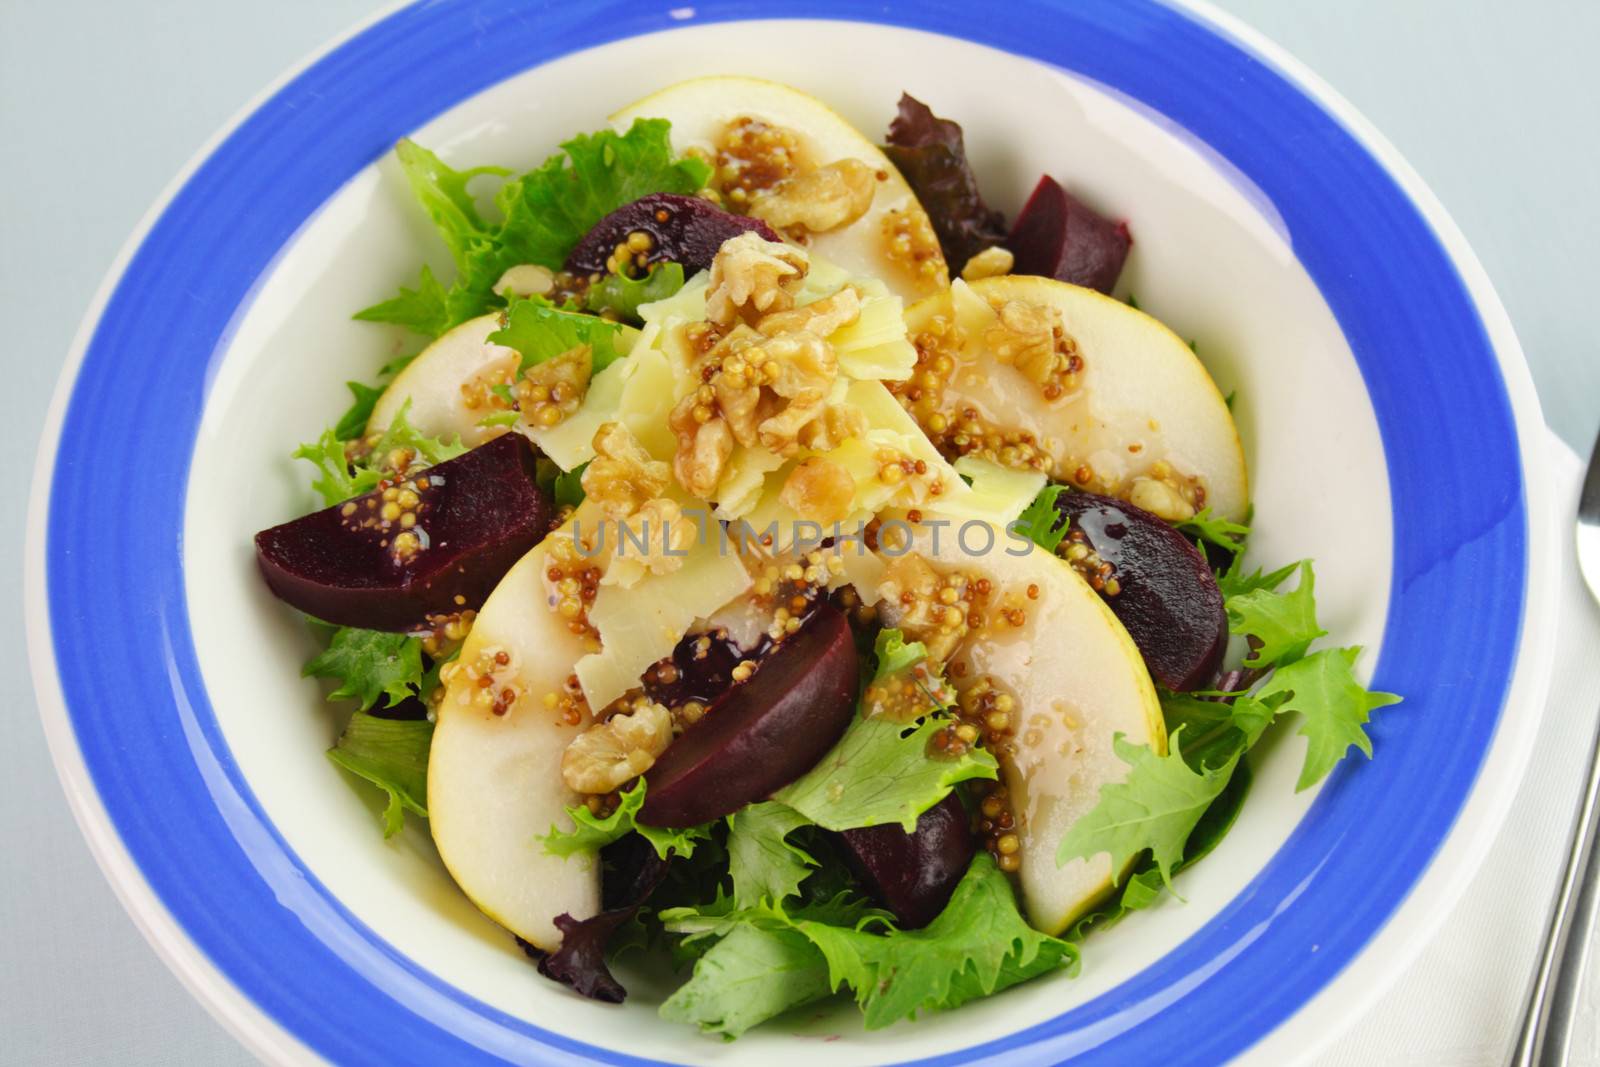 Beetrootn Salad by jabiru